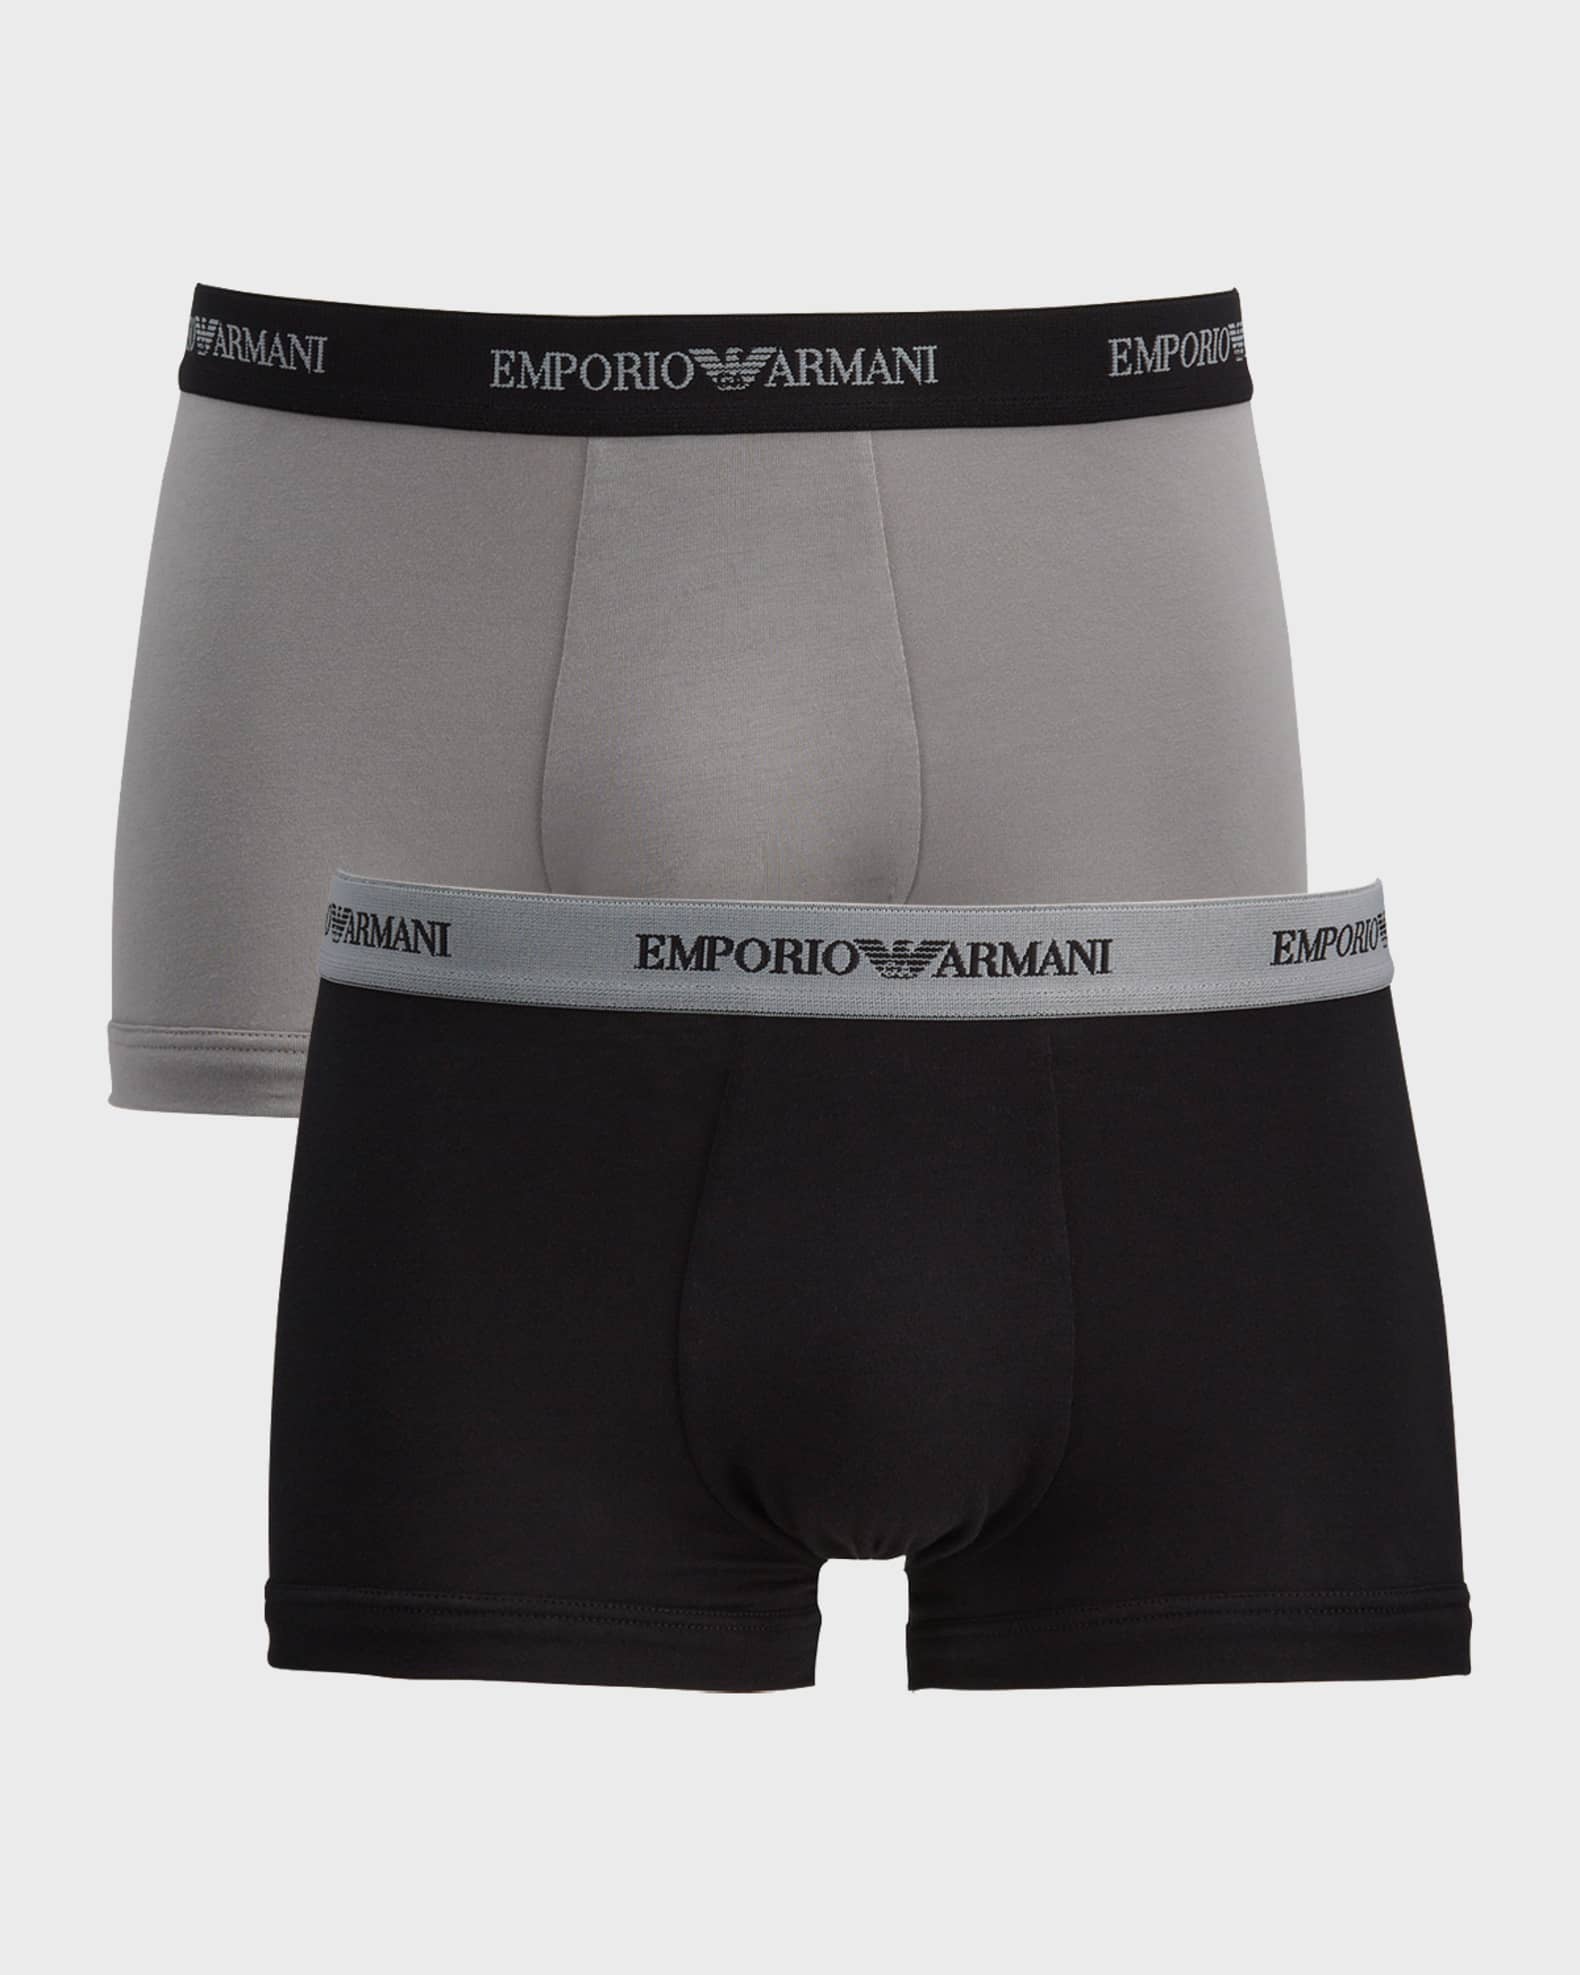 Emporio Armani Men's Jacquard Logo Mesh Brief, Black, Small : :  Clothing, Shoes & Accessories